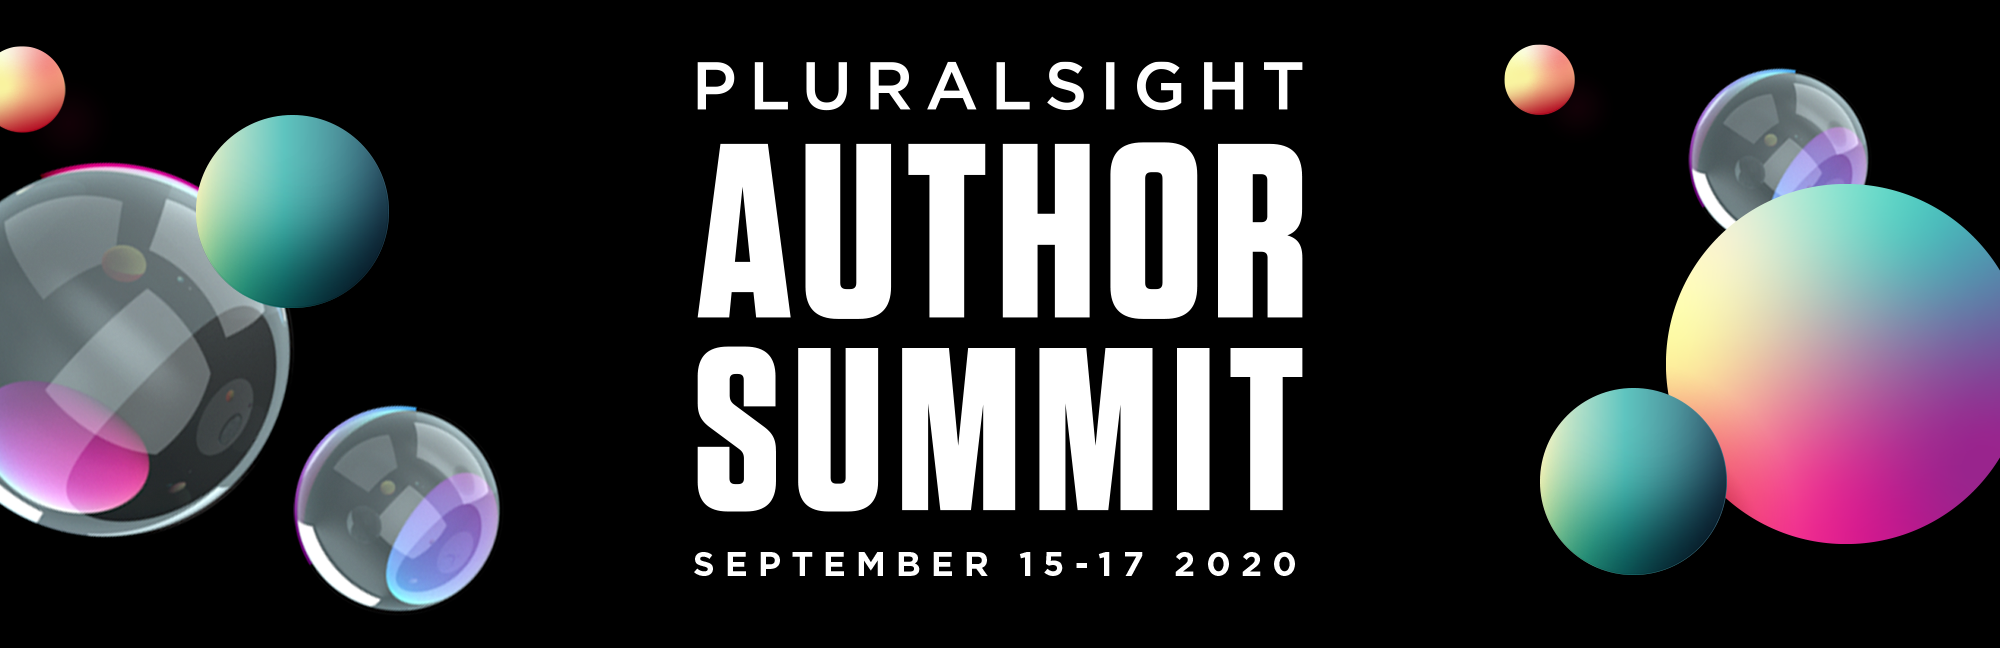 Author Summit 2020